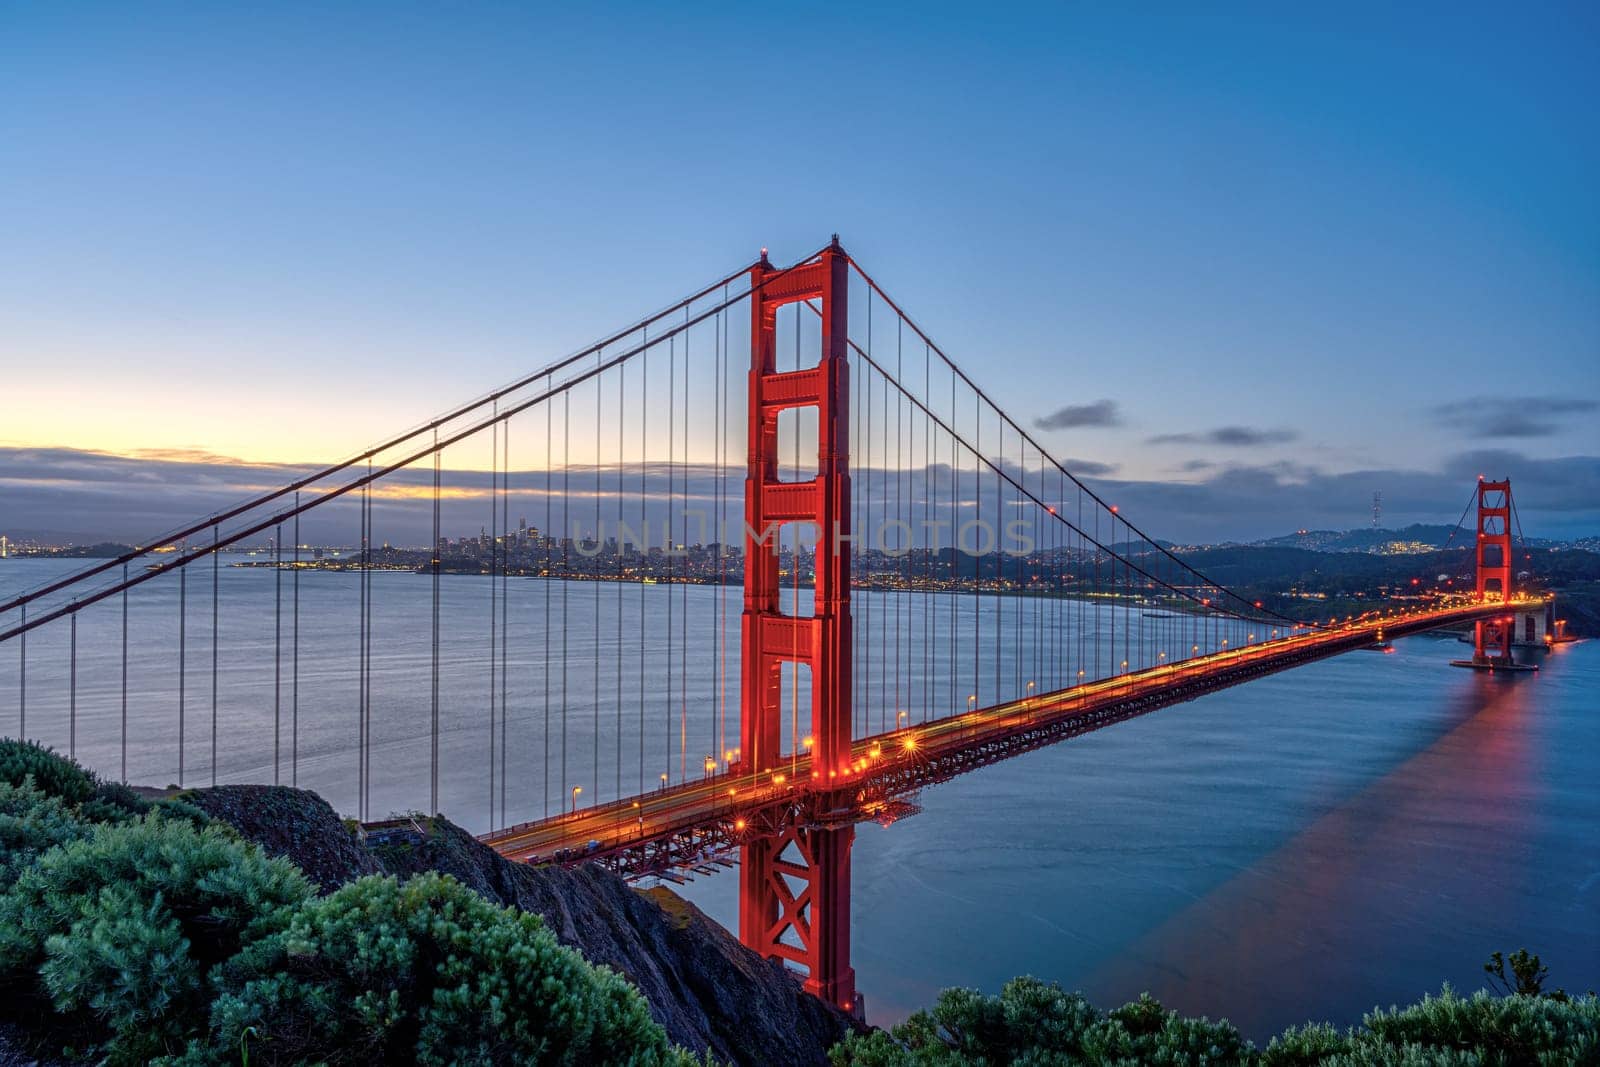 The famous Golden Gate Bridge in San Francisco by elxeneize